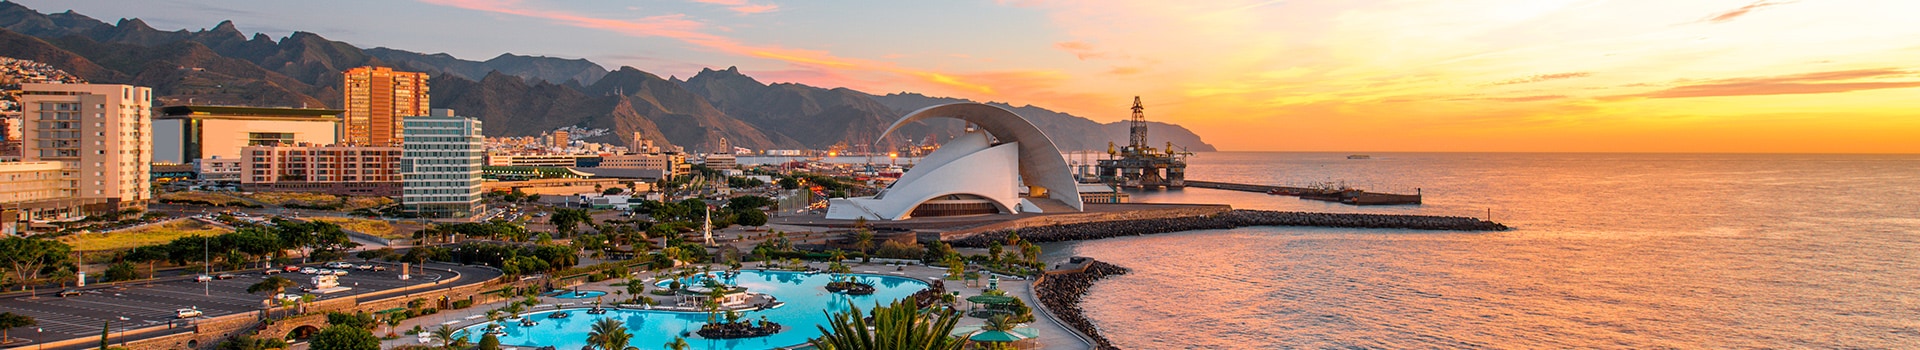 Newcastle - Tenerife